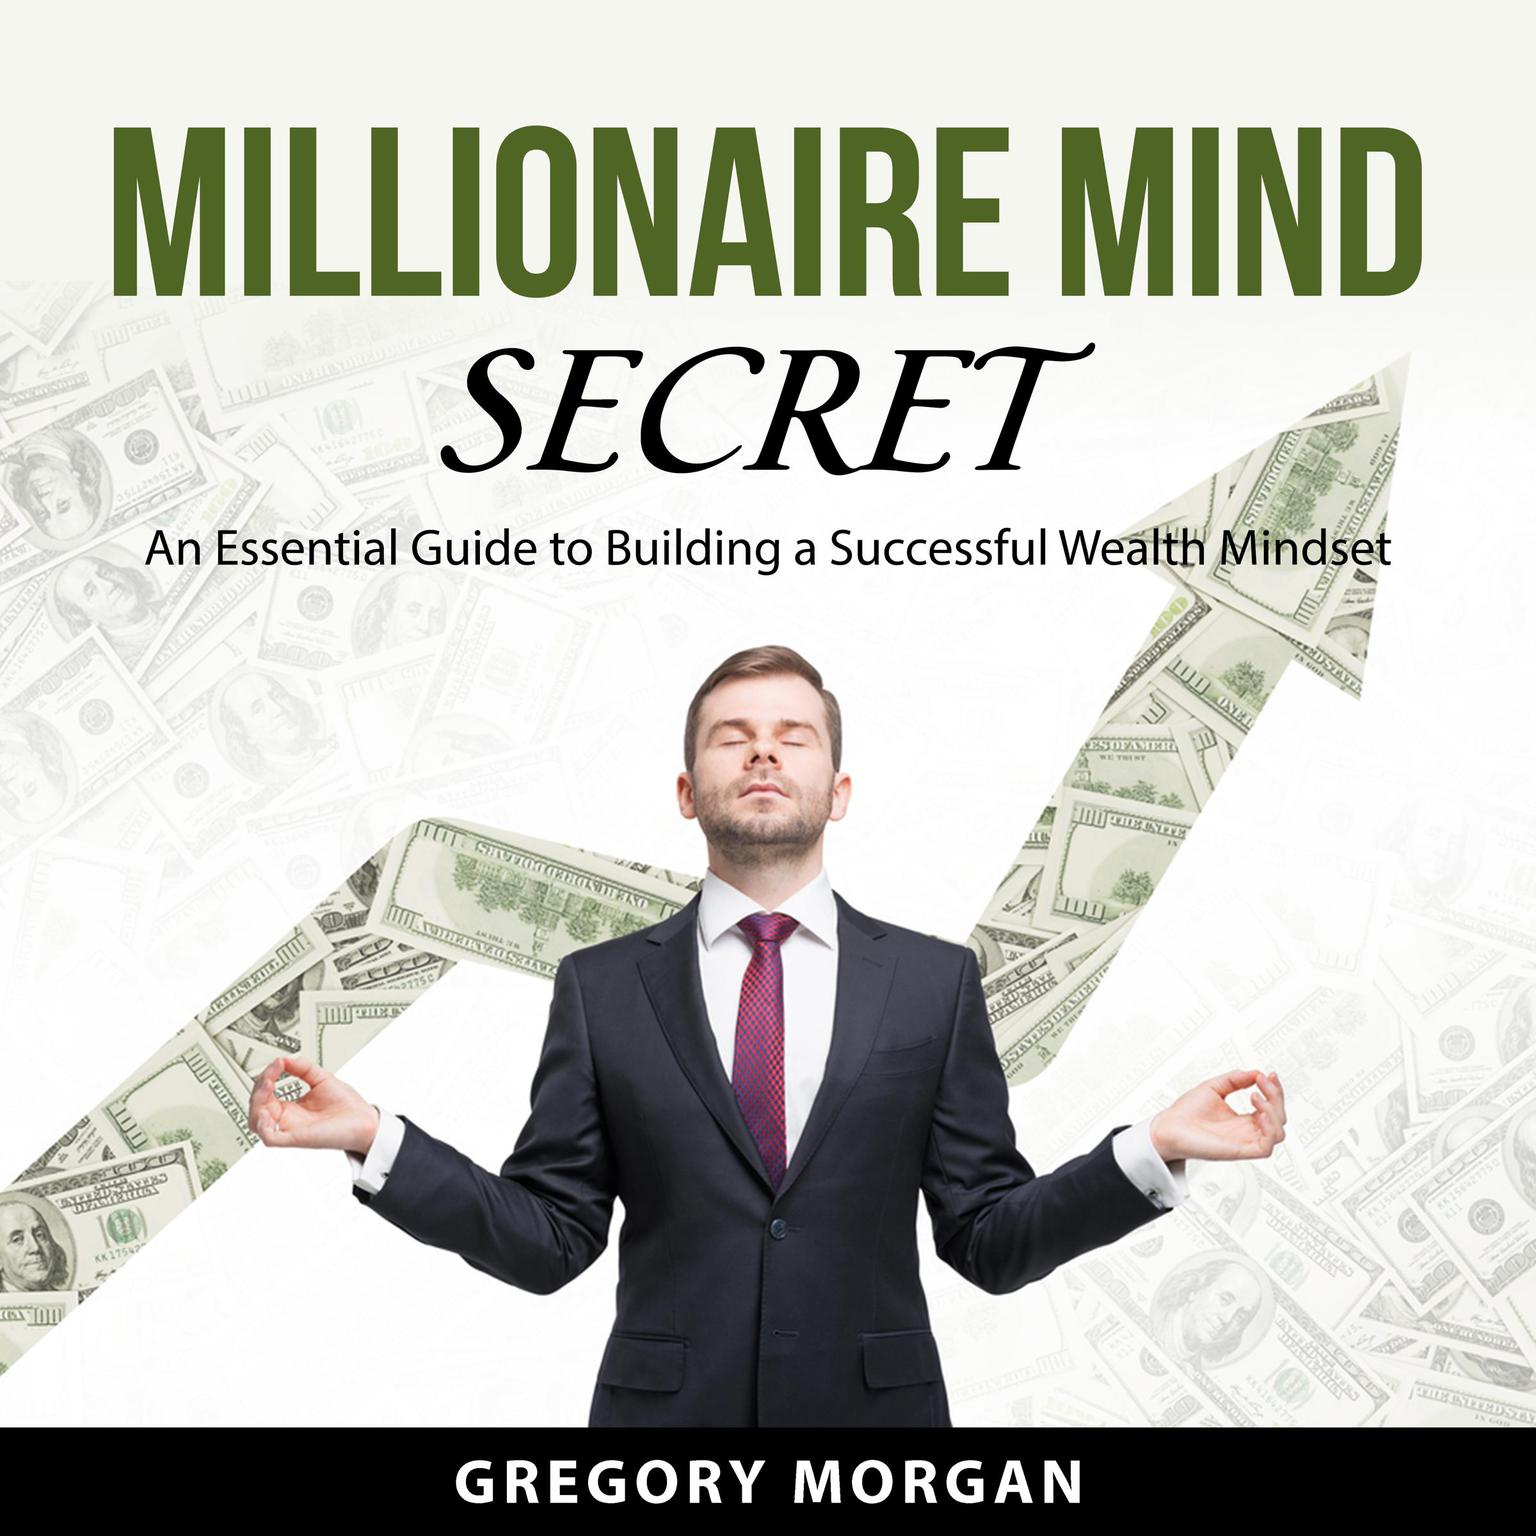 Millionaire Mind Secret Audiobook, by Gregory Morgan